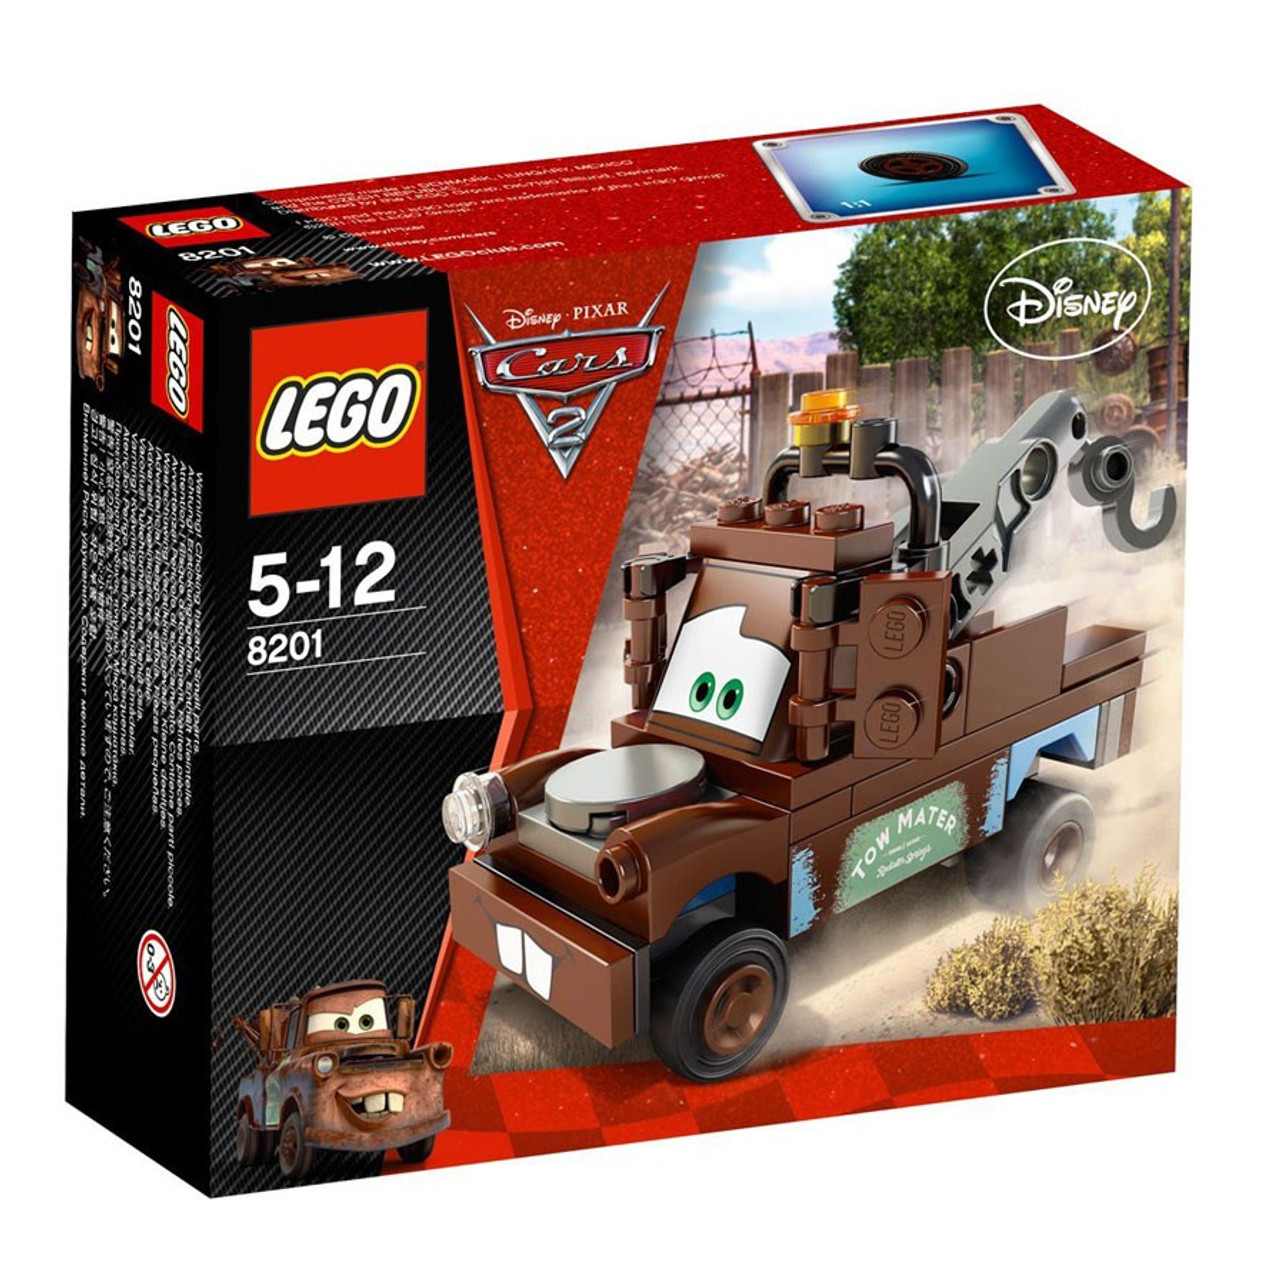 LEGO Disney Cars Cars 2 Radiator Springs Classic Mater Set